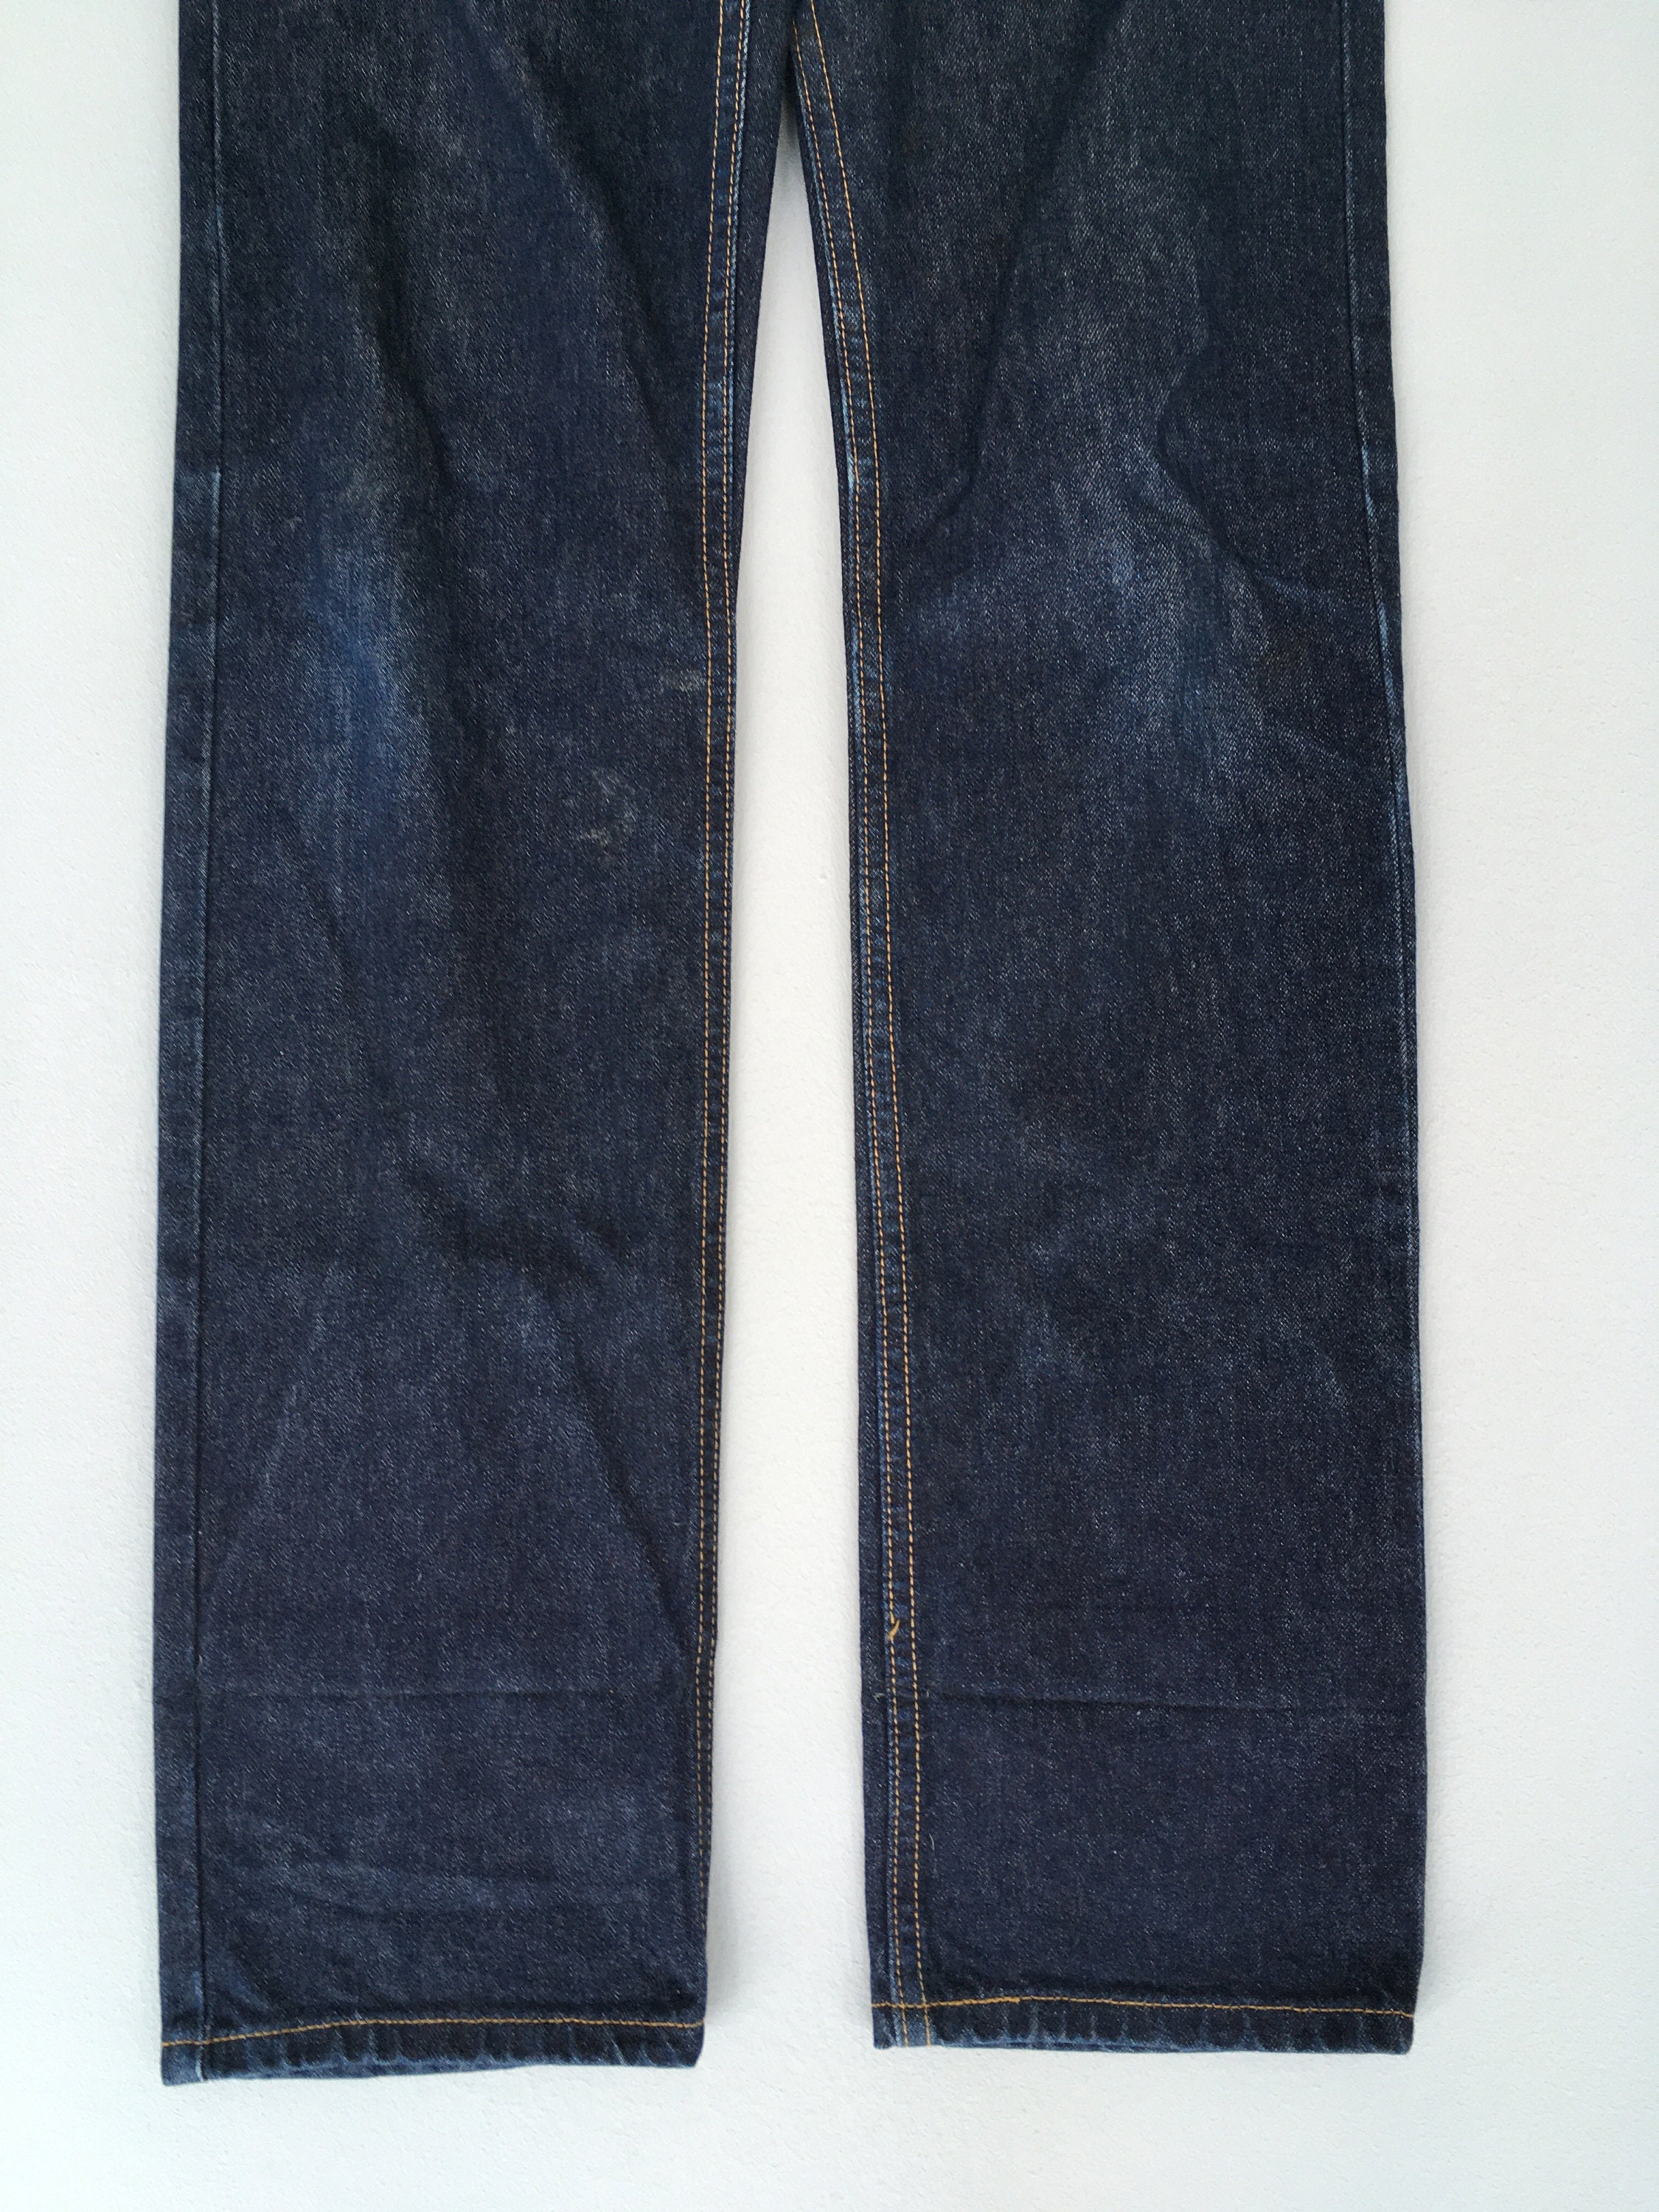 Size 27x33 Vintage Levis 607 Women Jeans Straight Leg Denim | Etsy